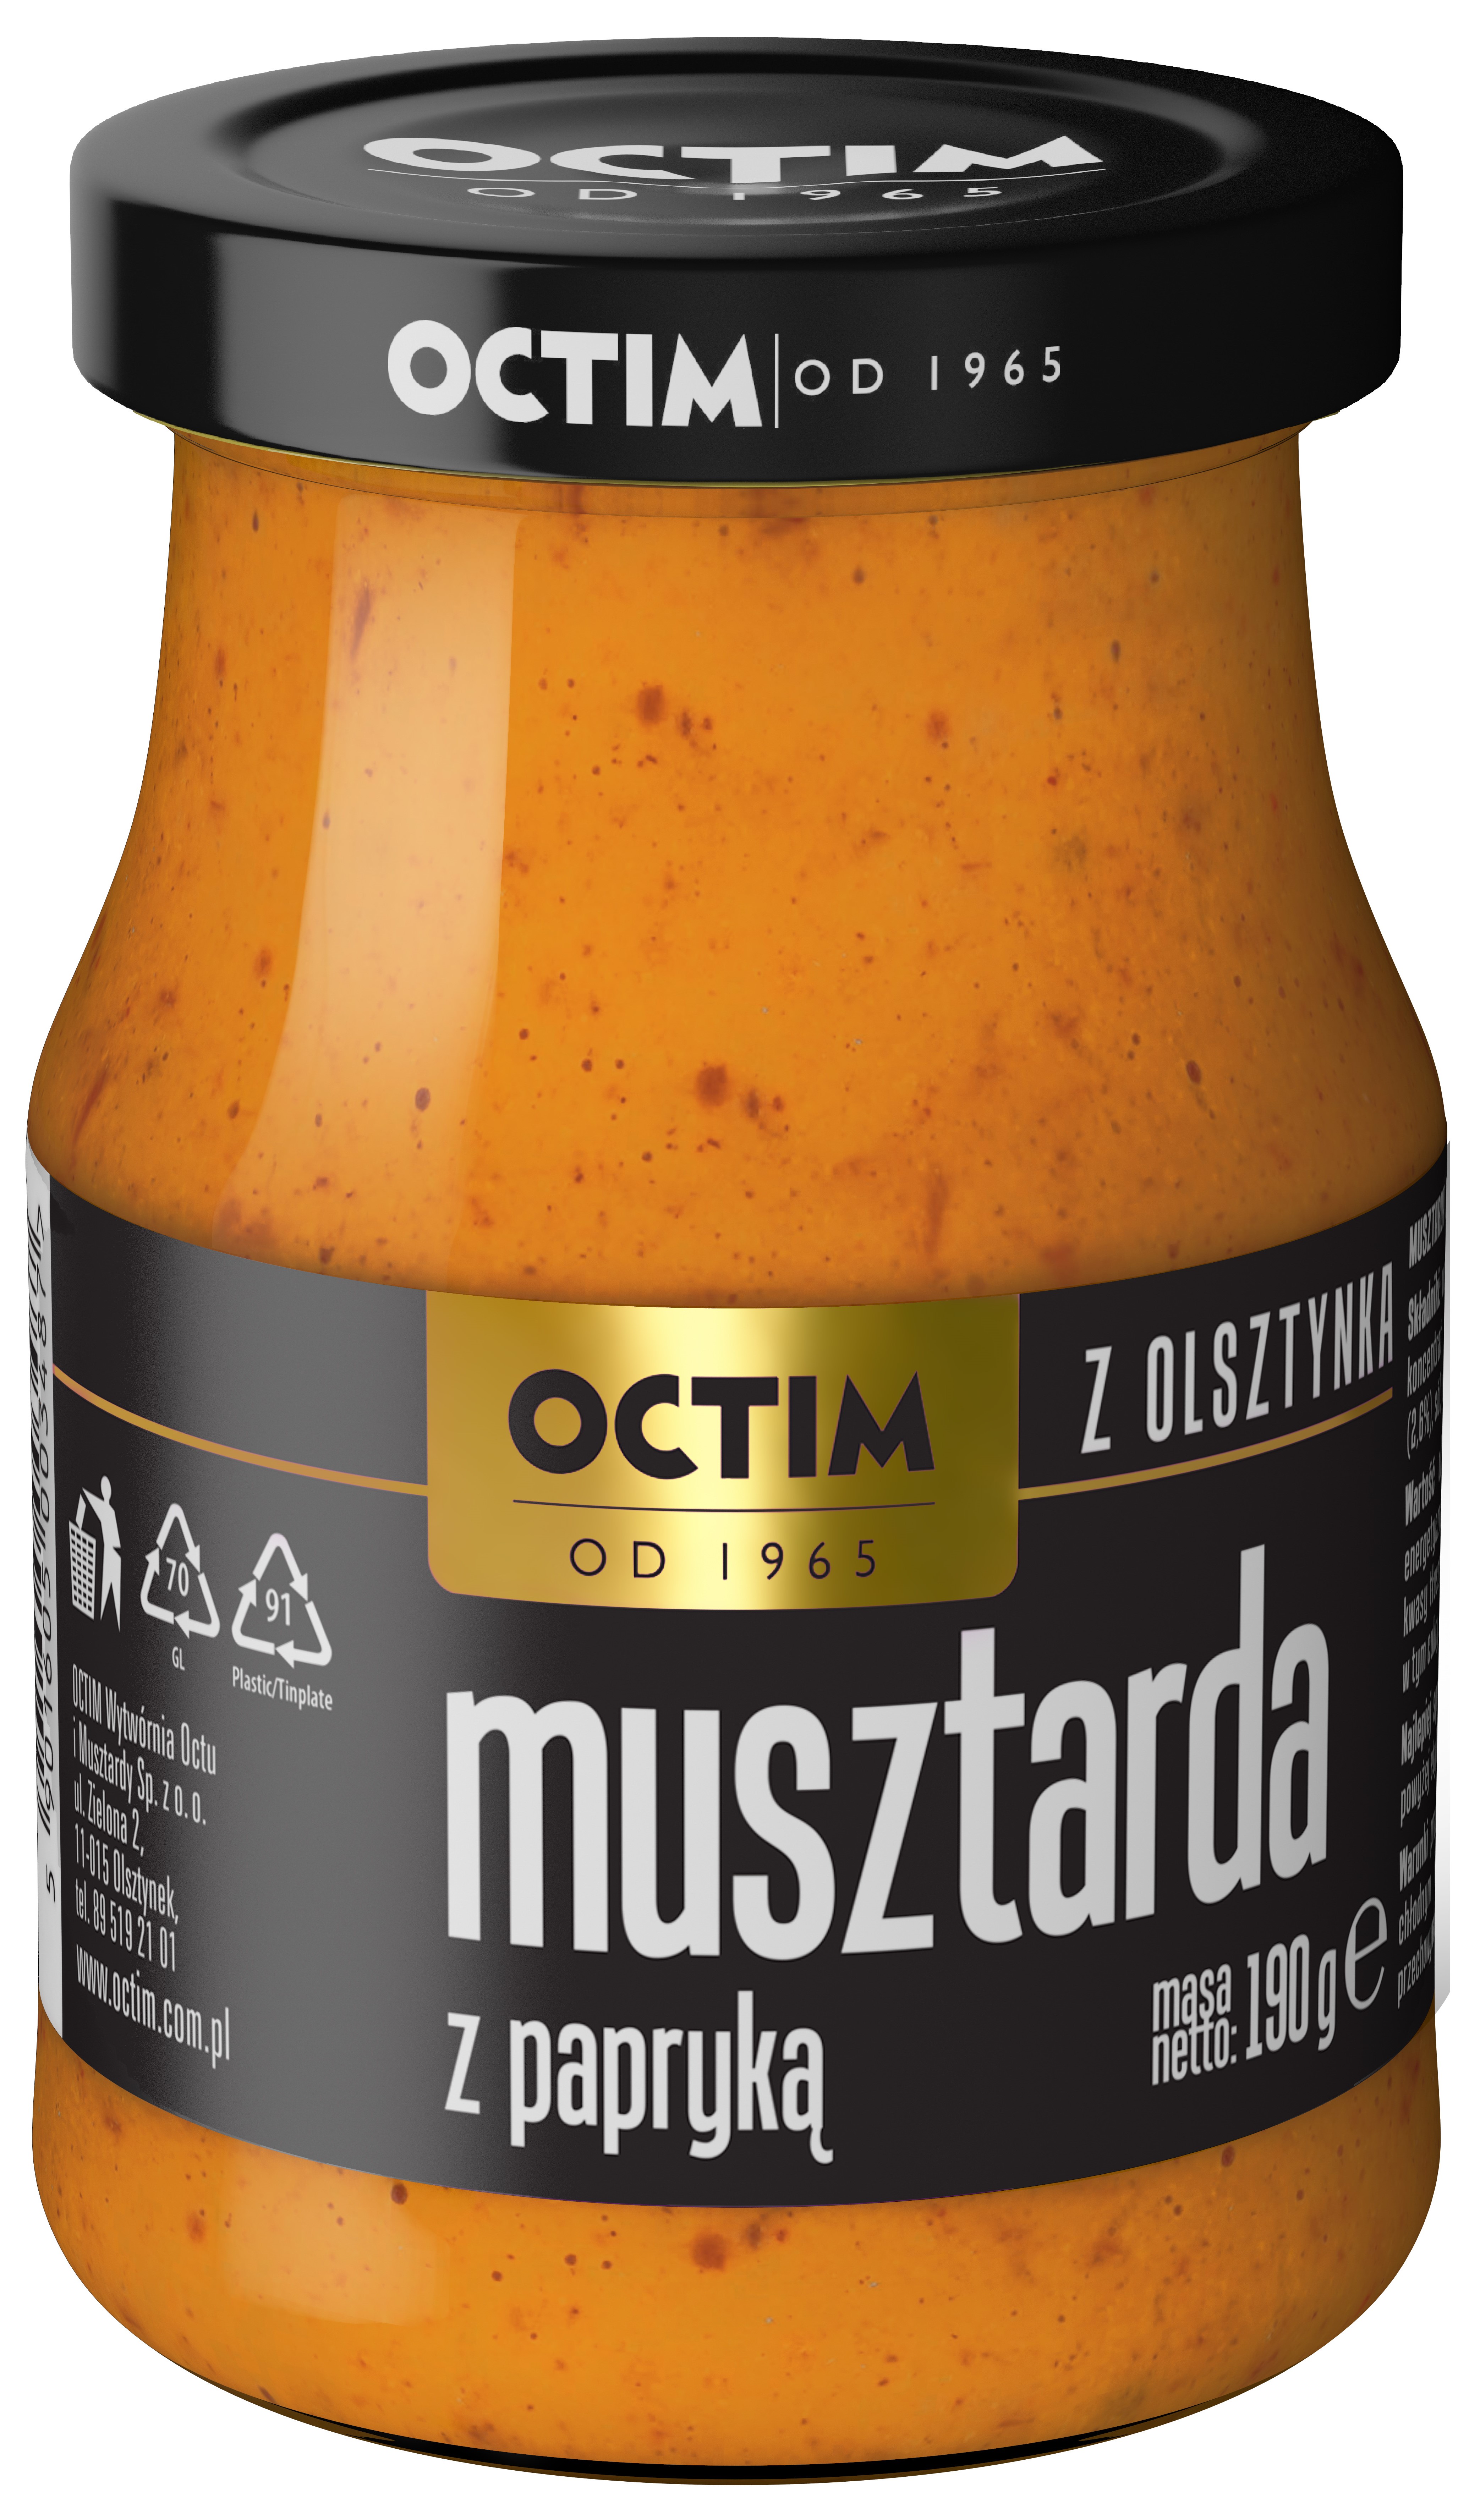 Octim Mustard with paprika